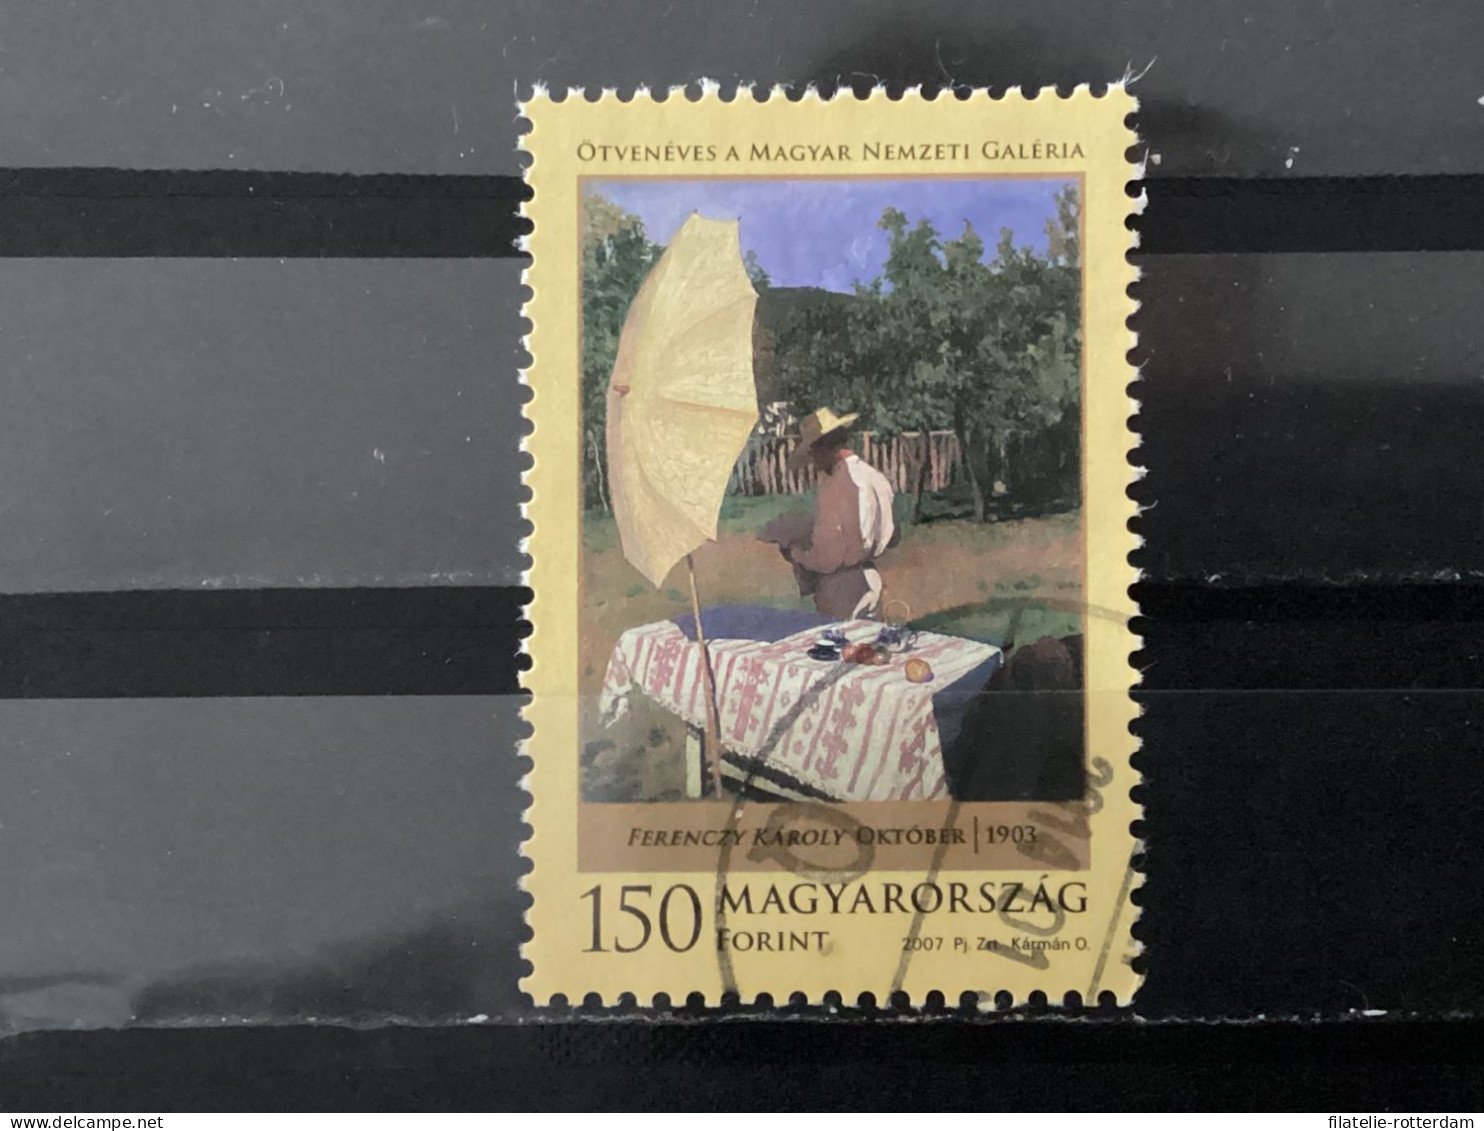 Hungary / Hongarije - National Gallery (150) 2007 - Used Stamps